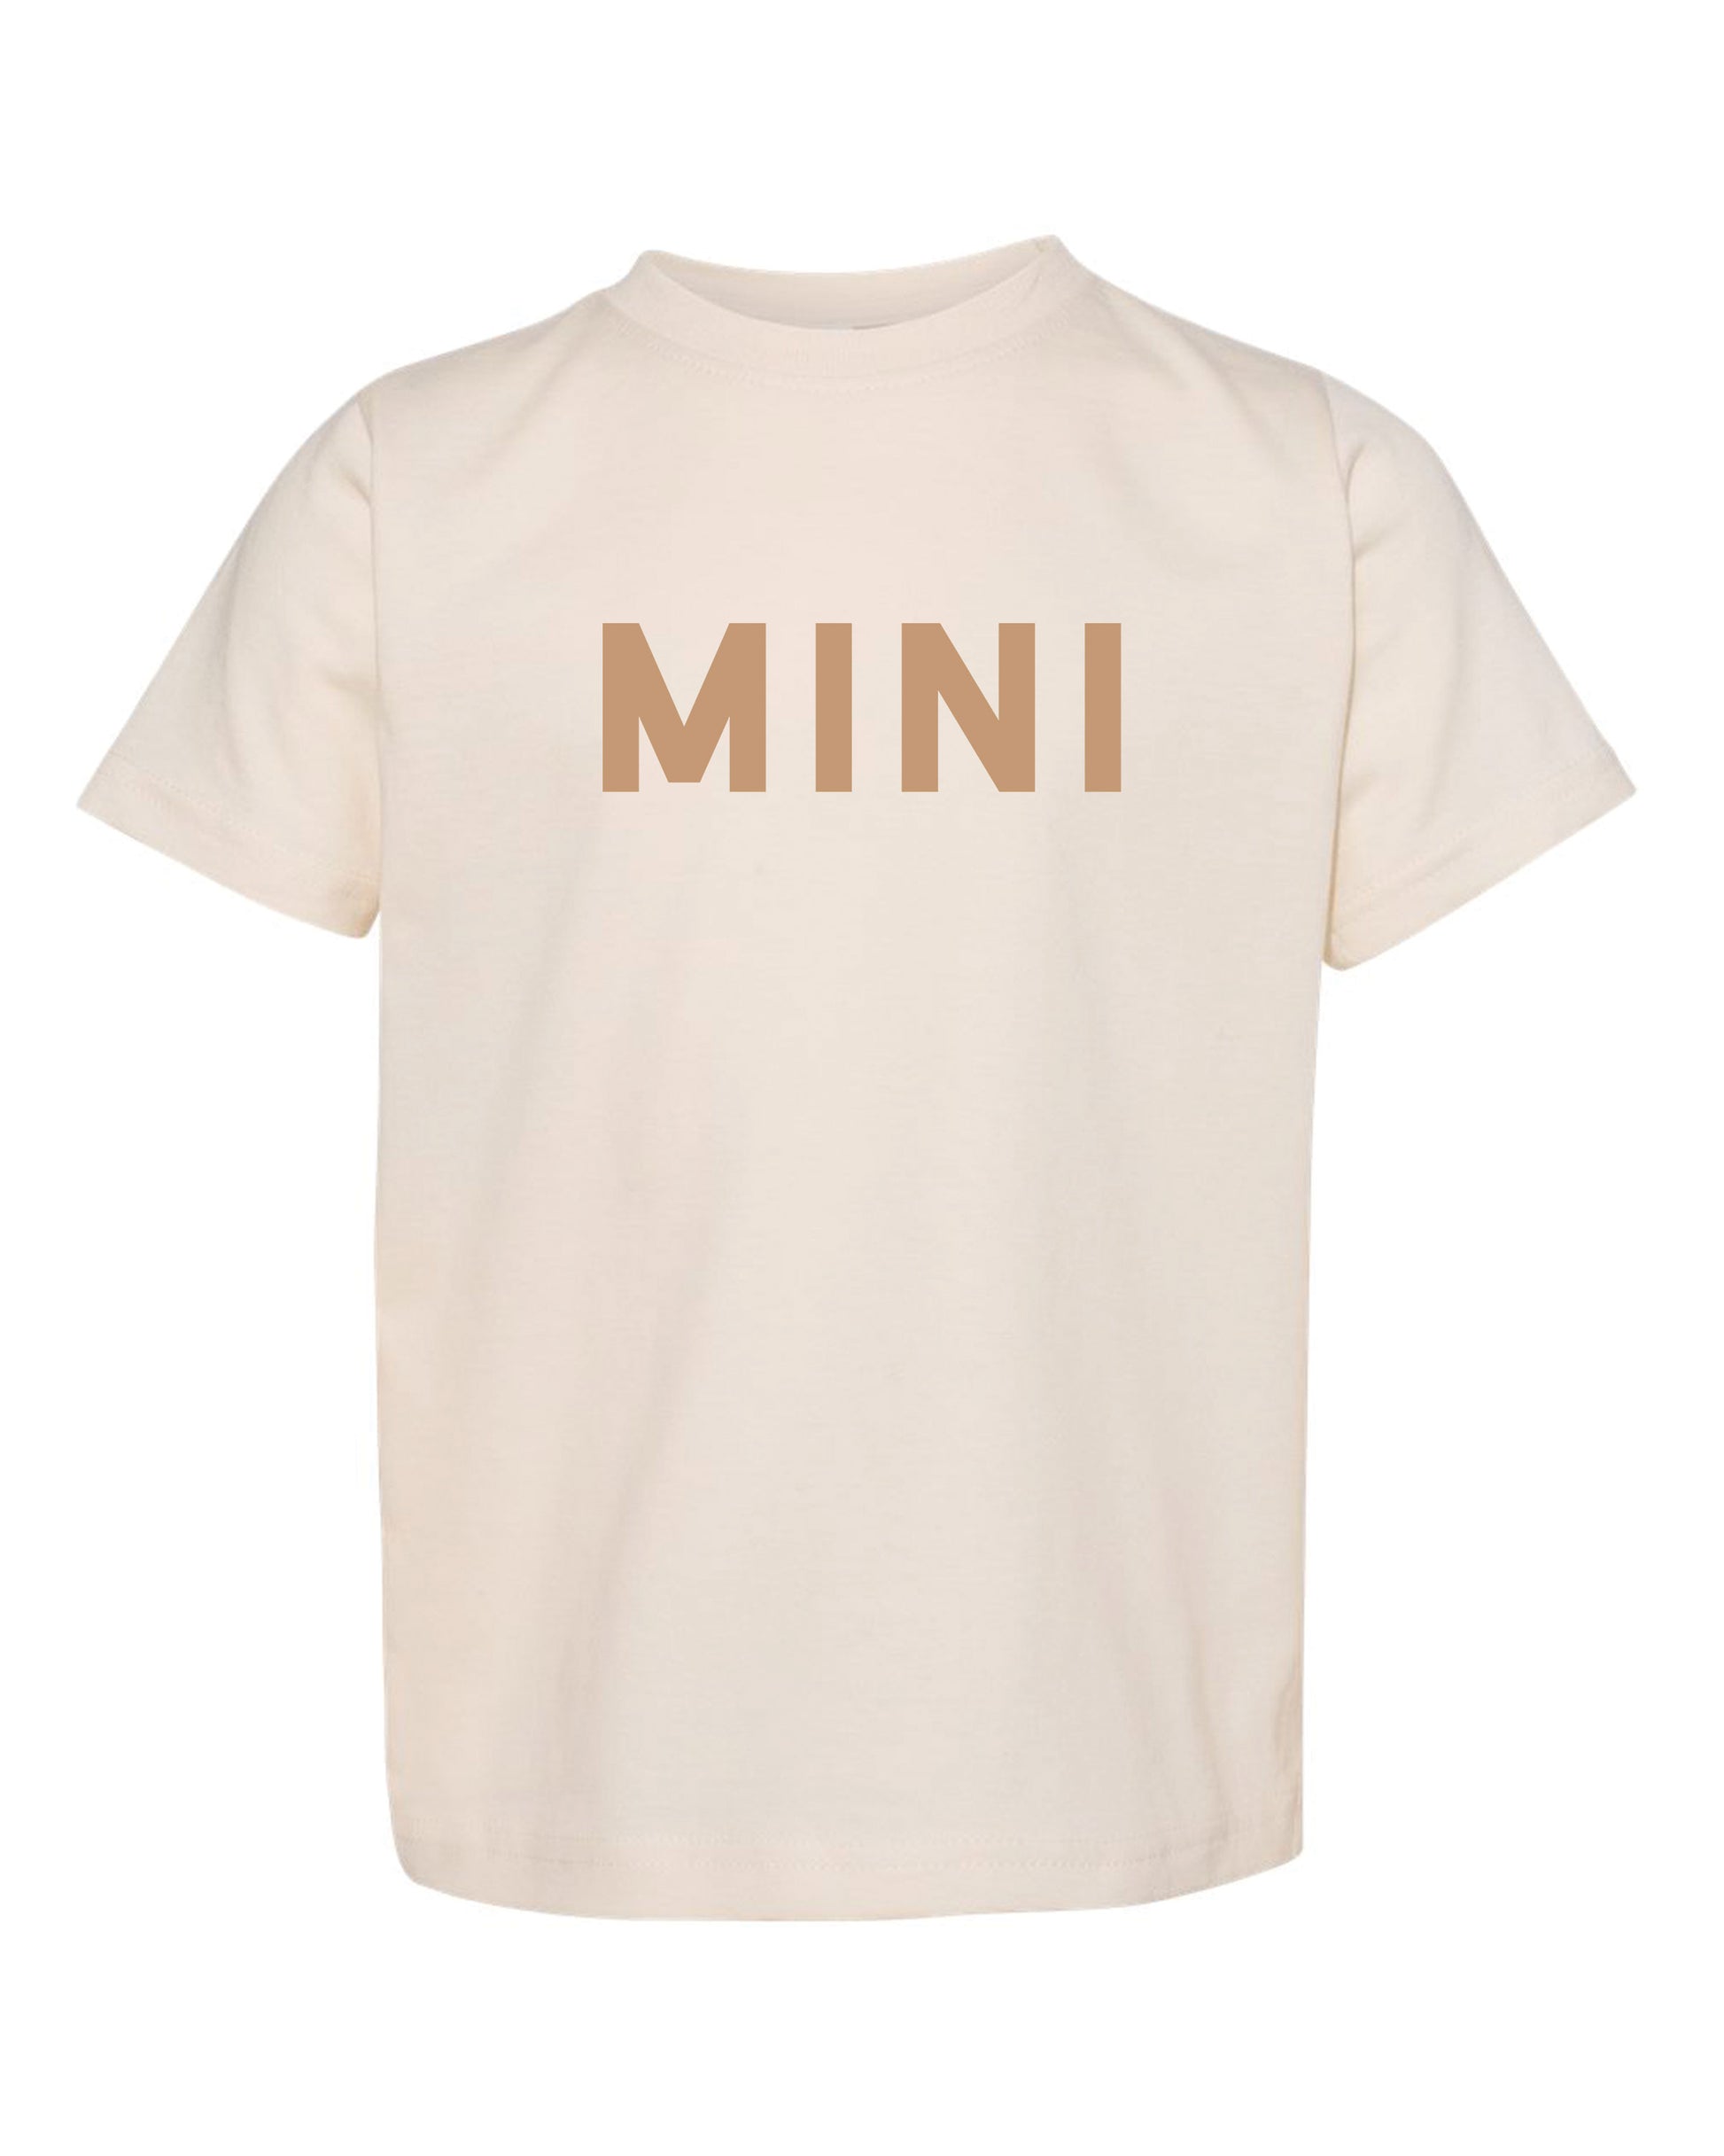 Classic Mini | Tee | Kids-Kids Tees-Sister Shirts-Sister Shirts, Cute & Custom Tees for Mama & Littles in Trussville, Alabama.